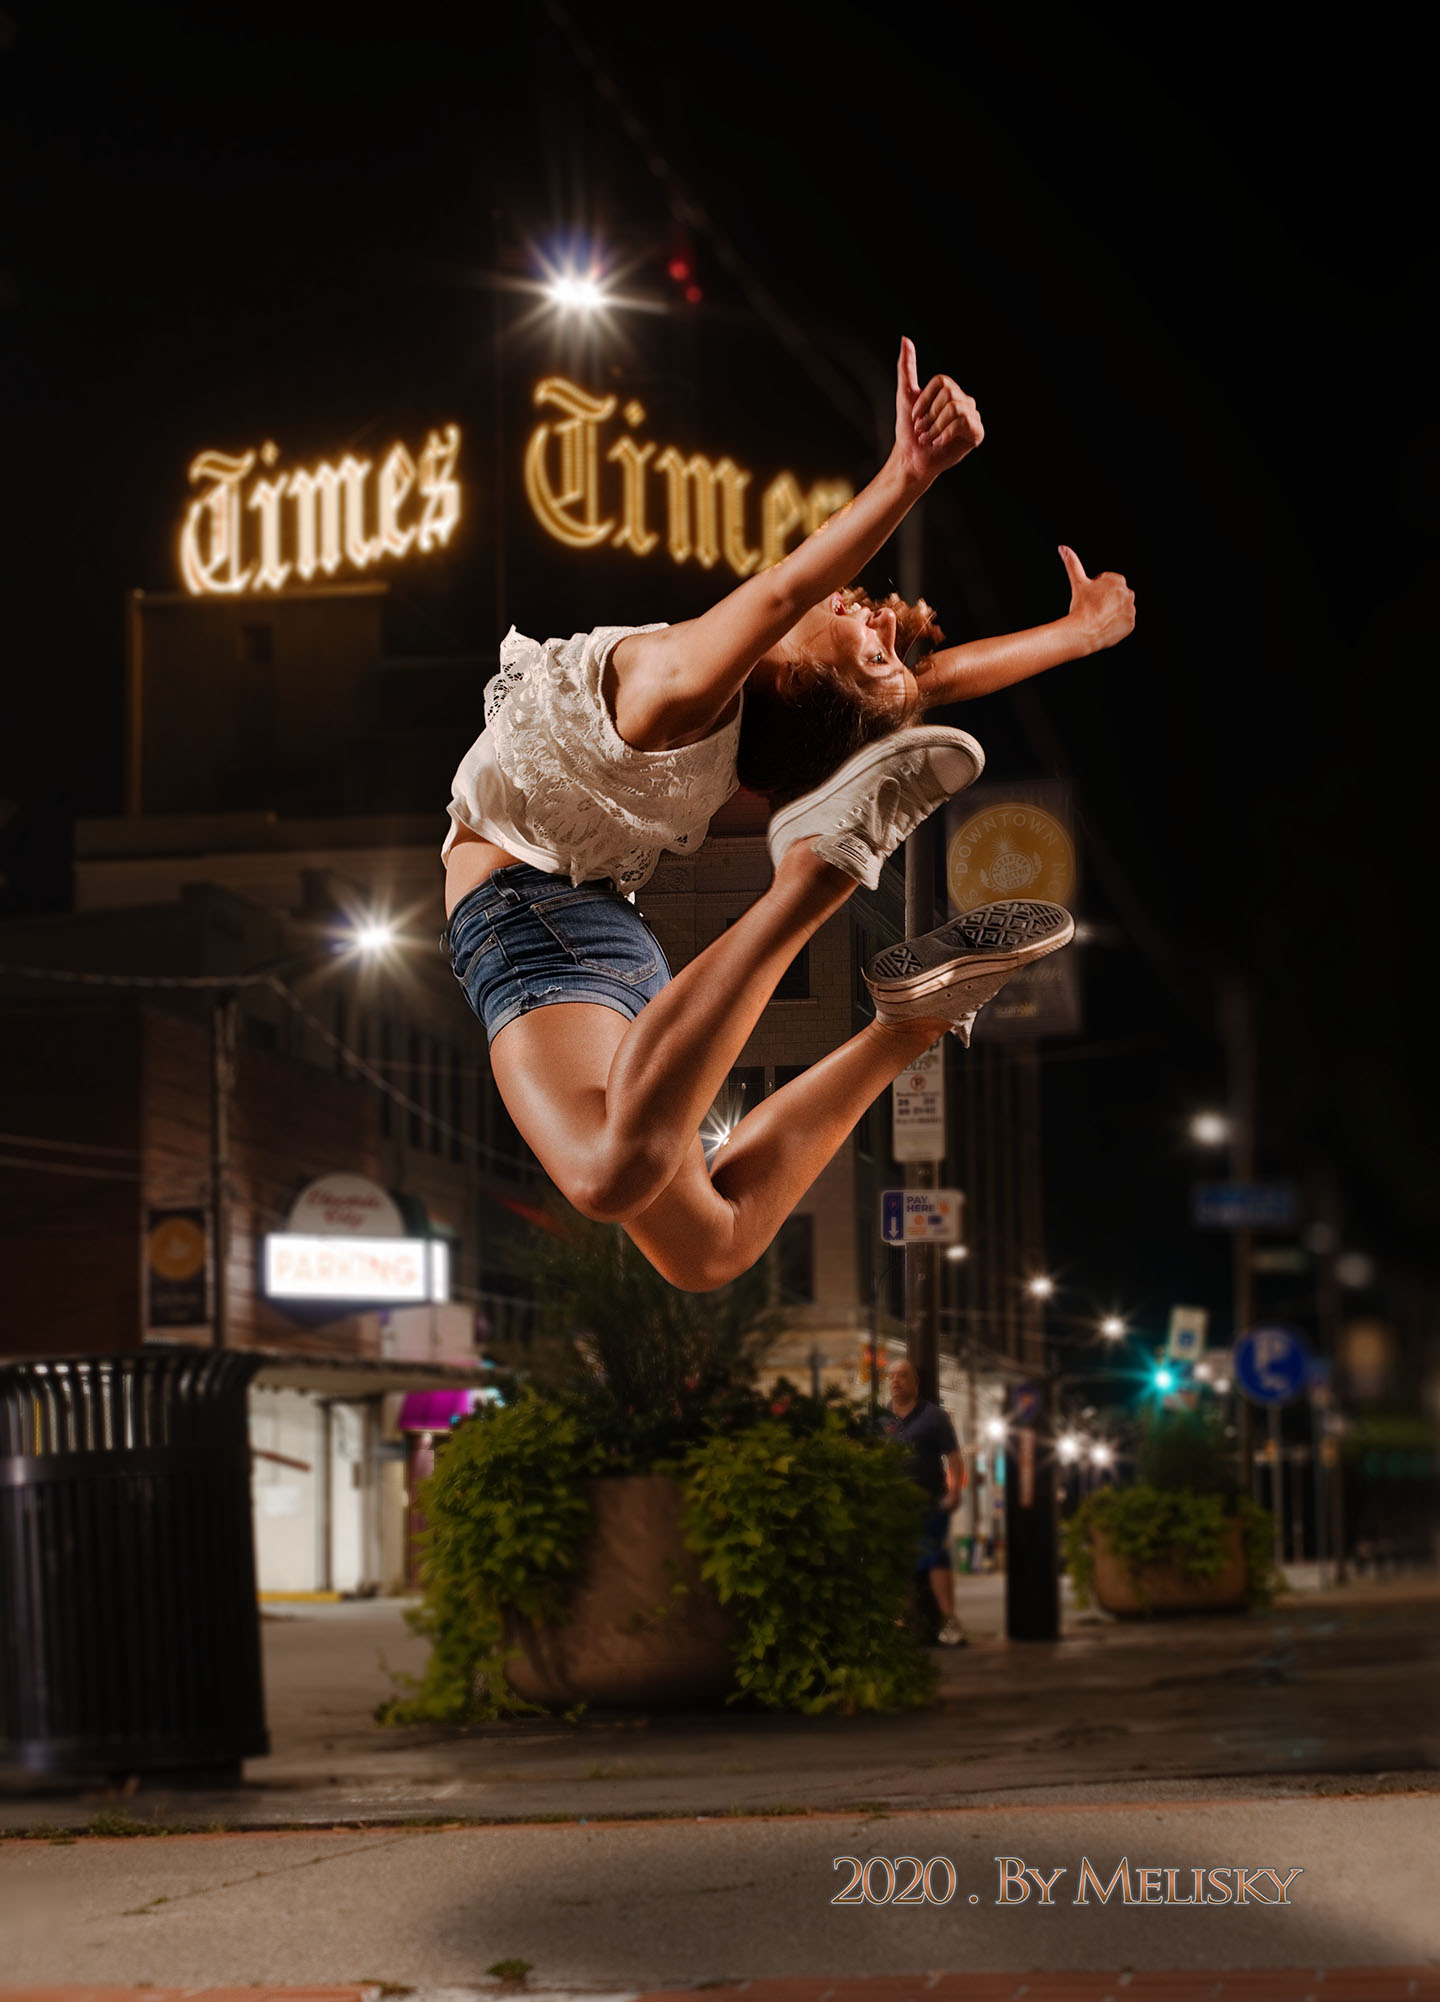 Dancer leaping at scranton times